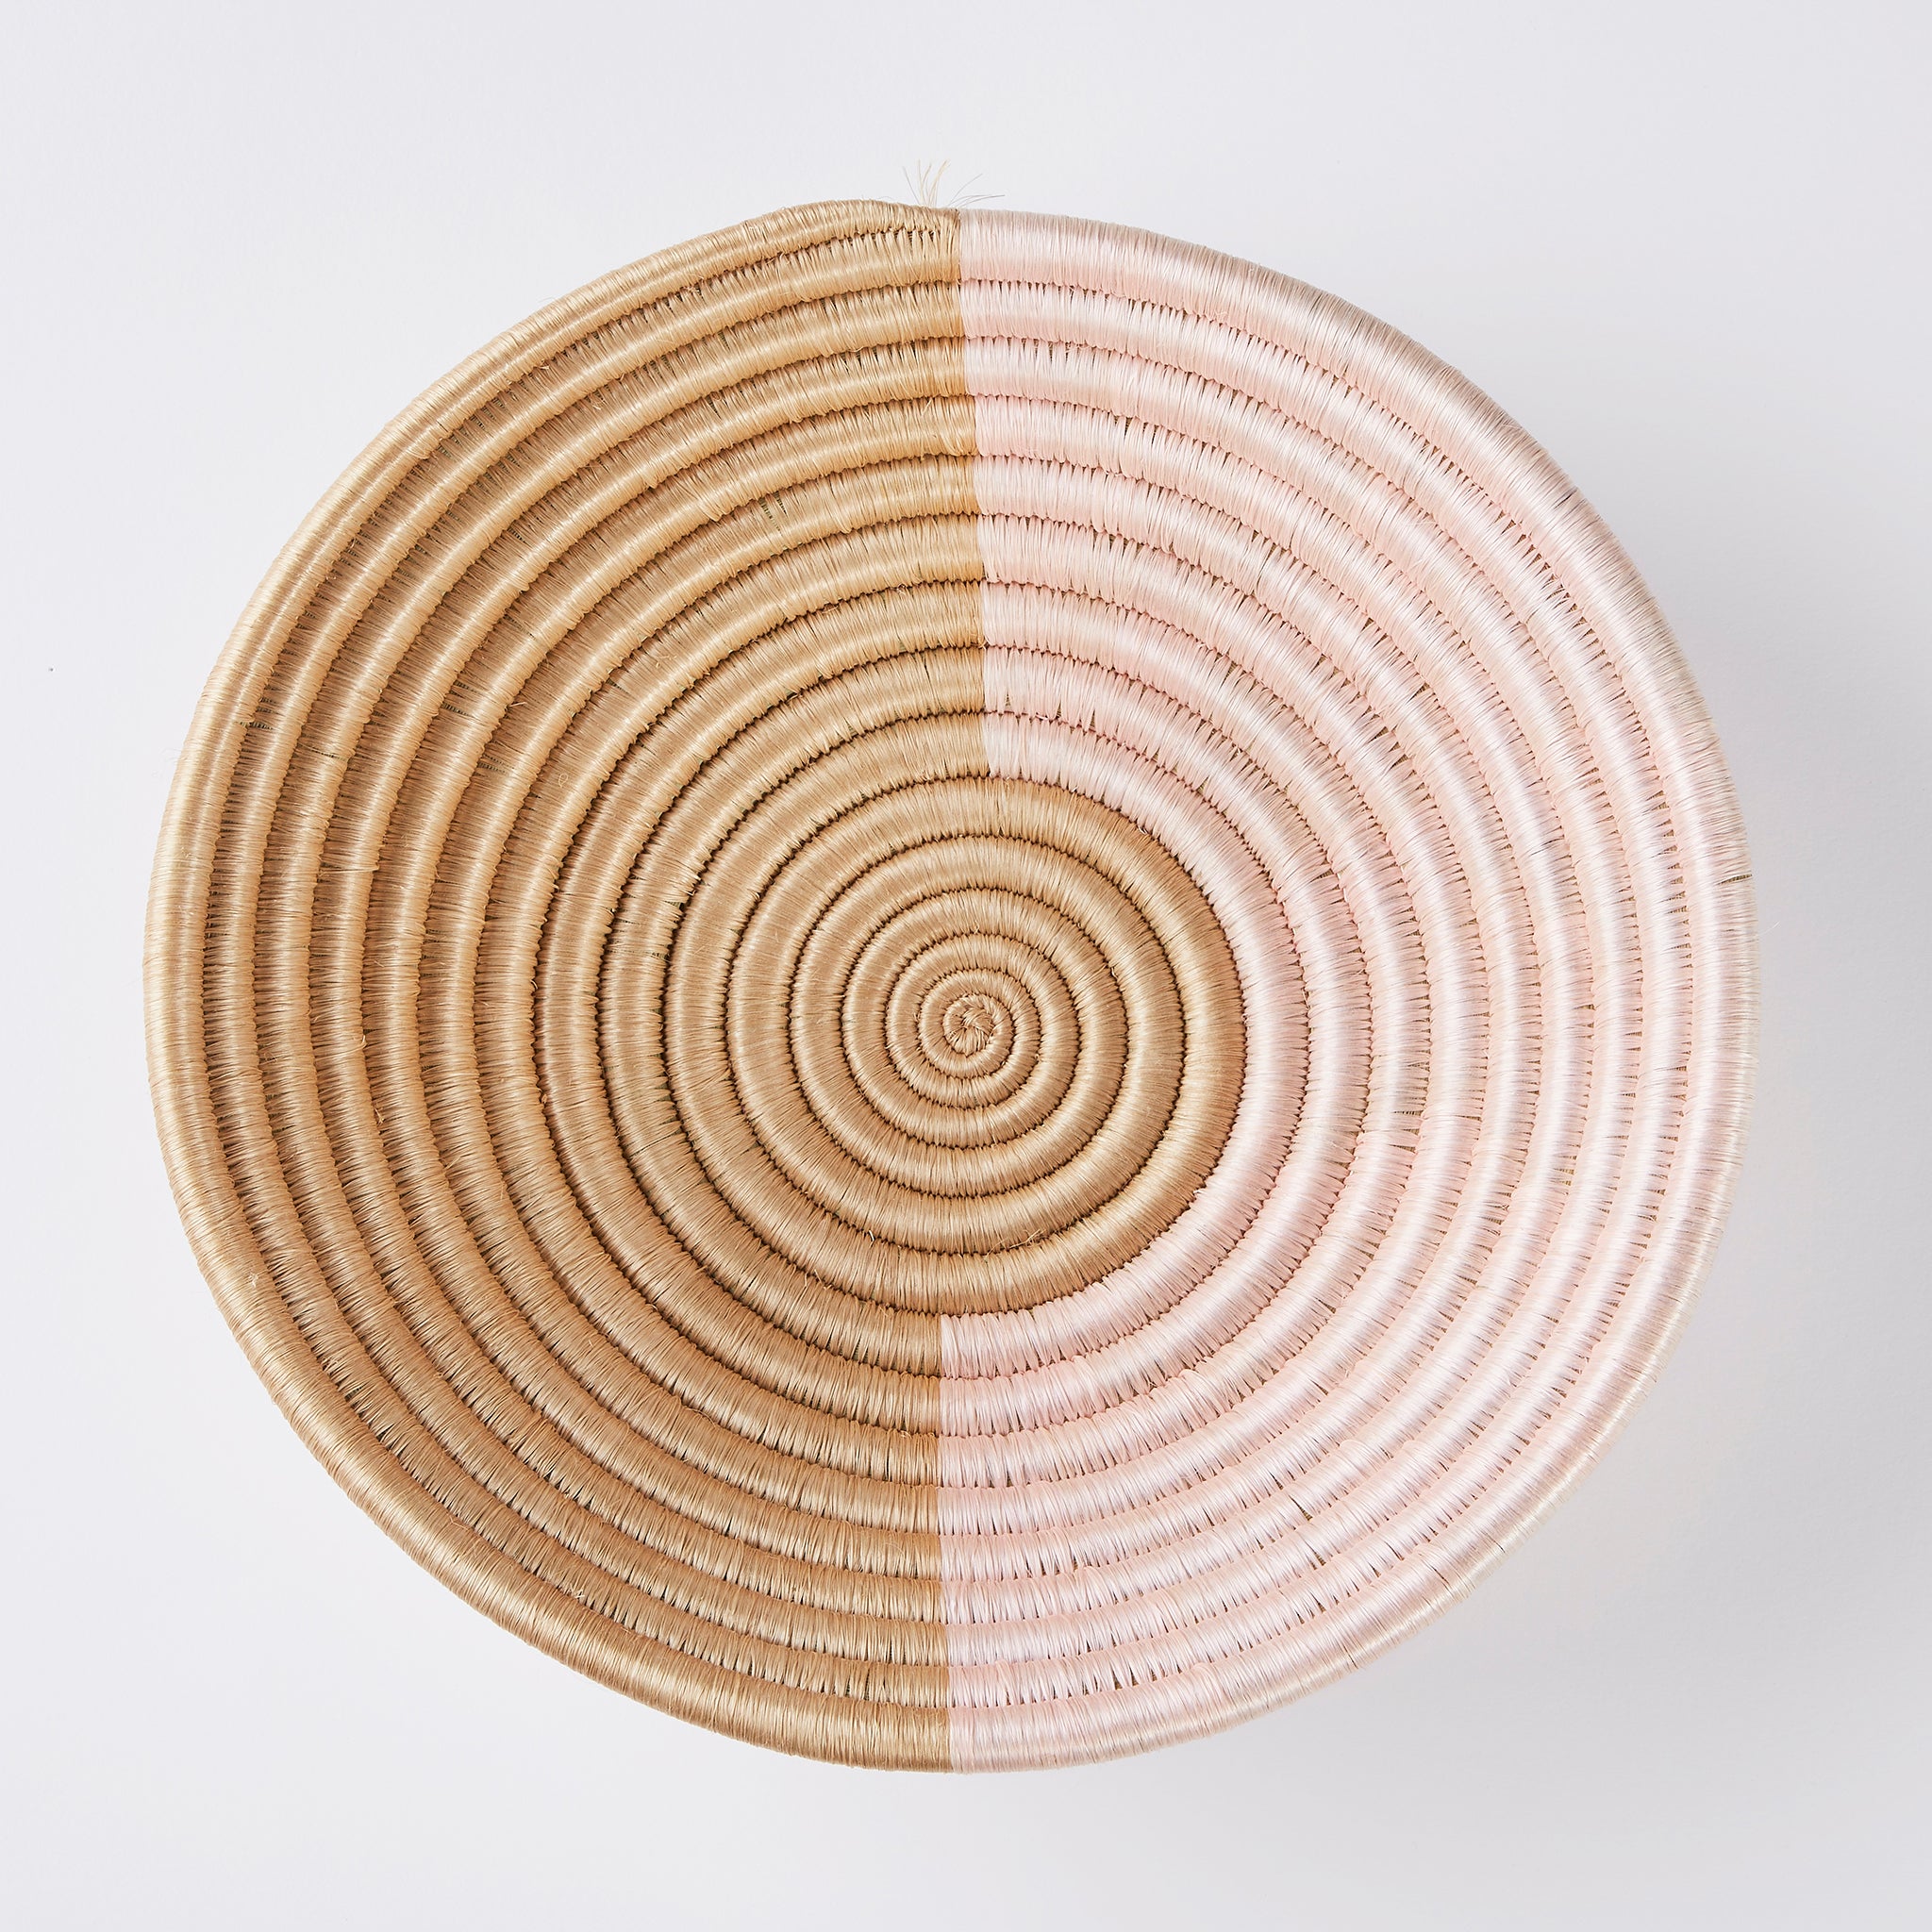 Akeza wall plate and basket bowl - By Native